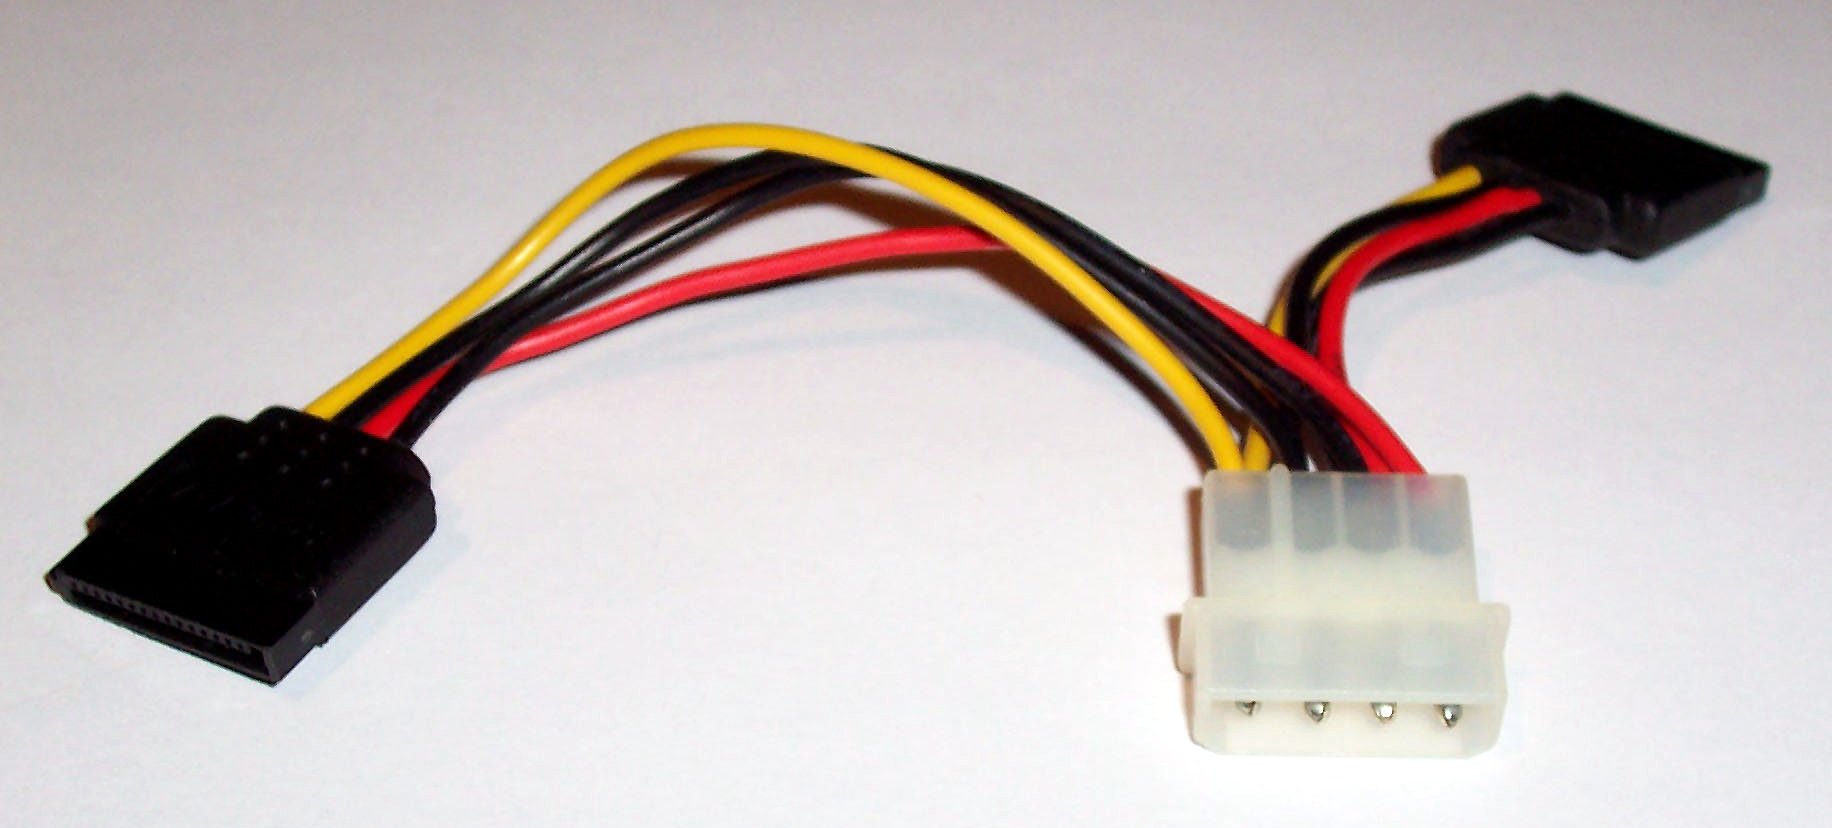 A Molex to 2 x SATA power splitter cable